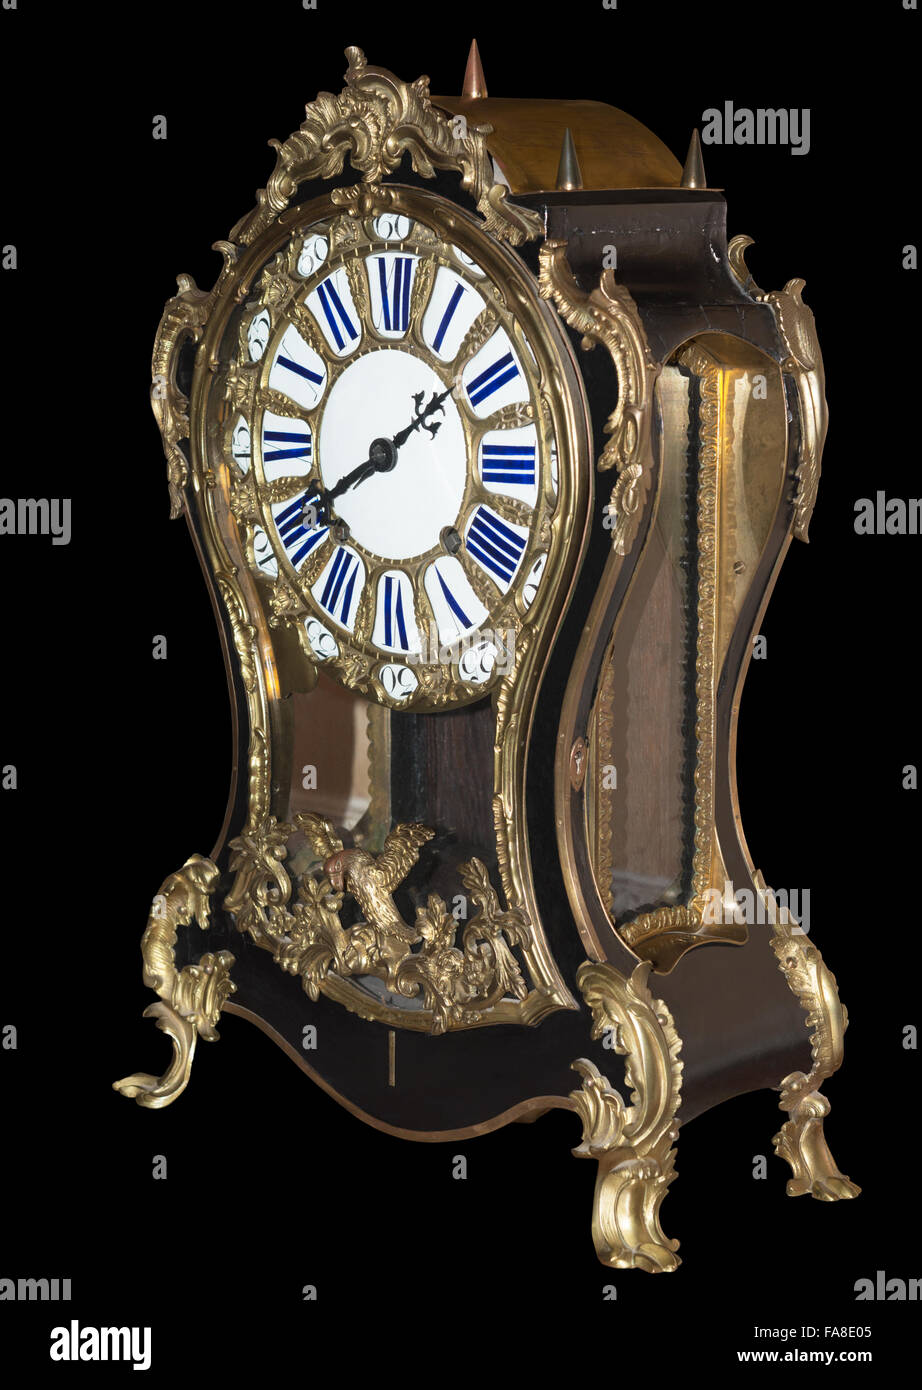 Isolated antique clock Stock Photo